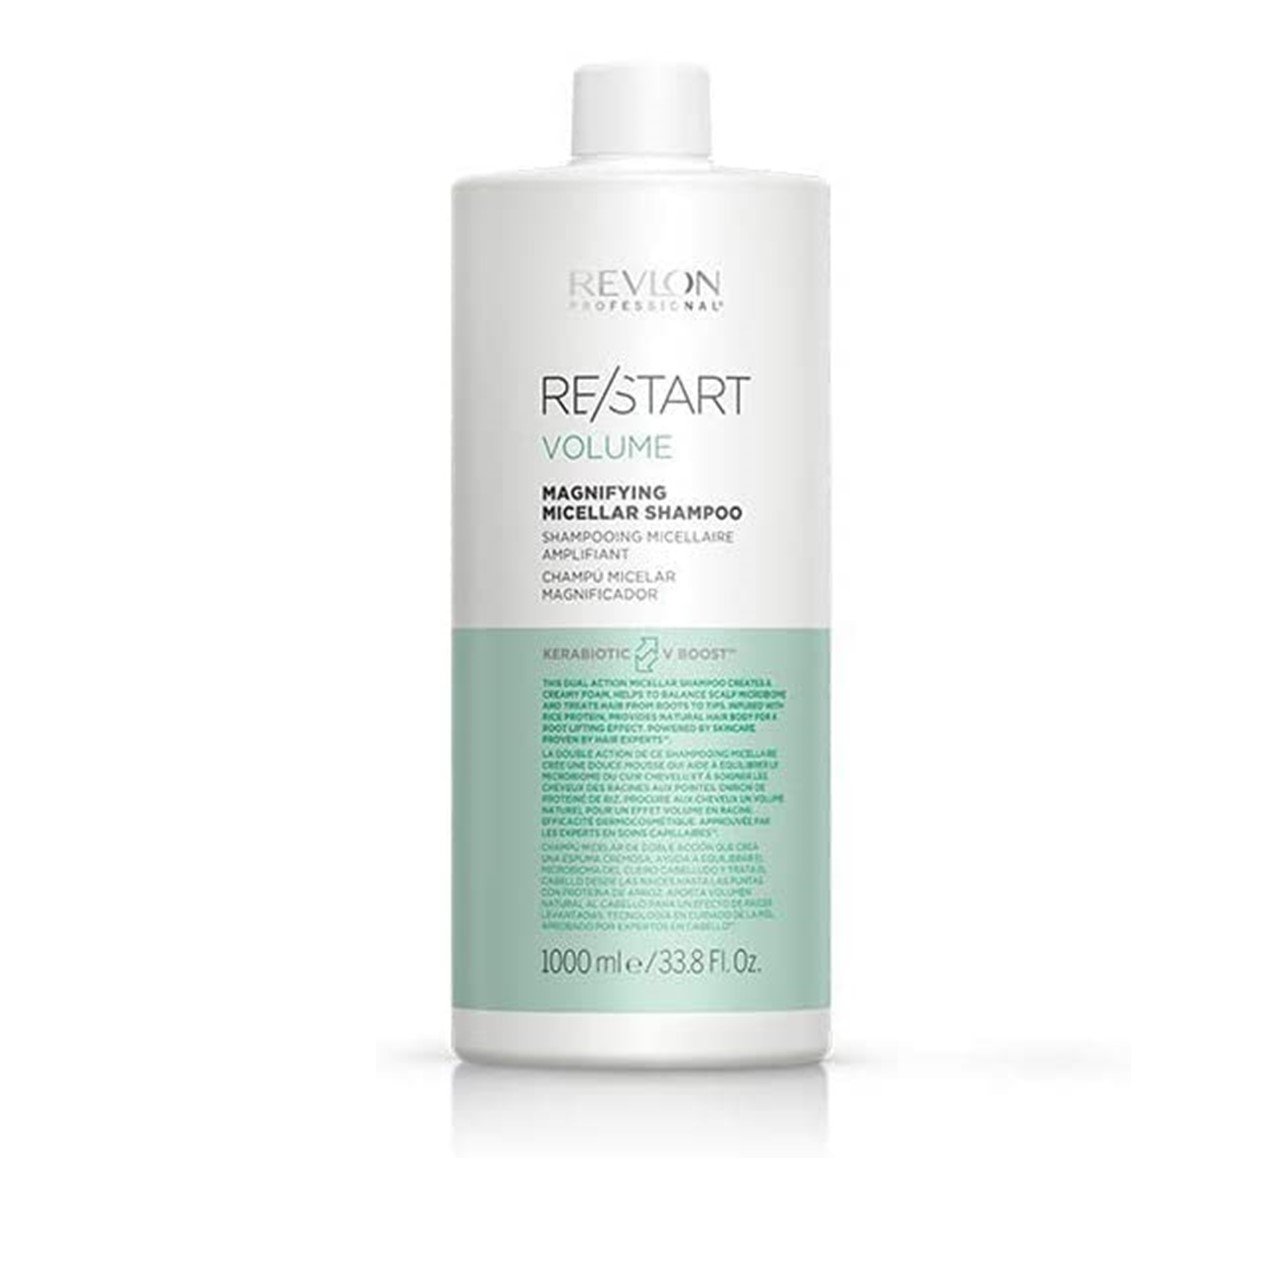 Revlon Professional Re/Start Volume Magnifying Micellar Shampoo 1L